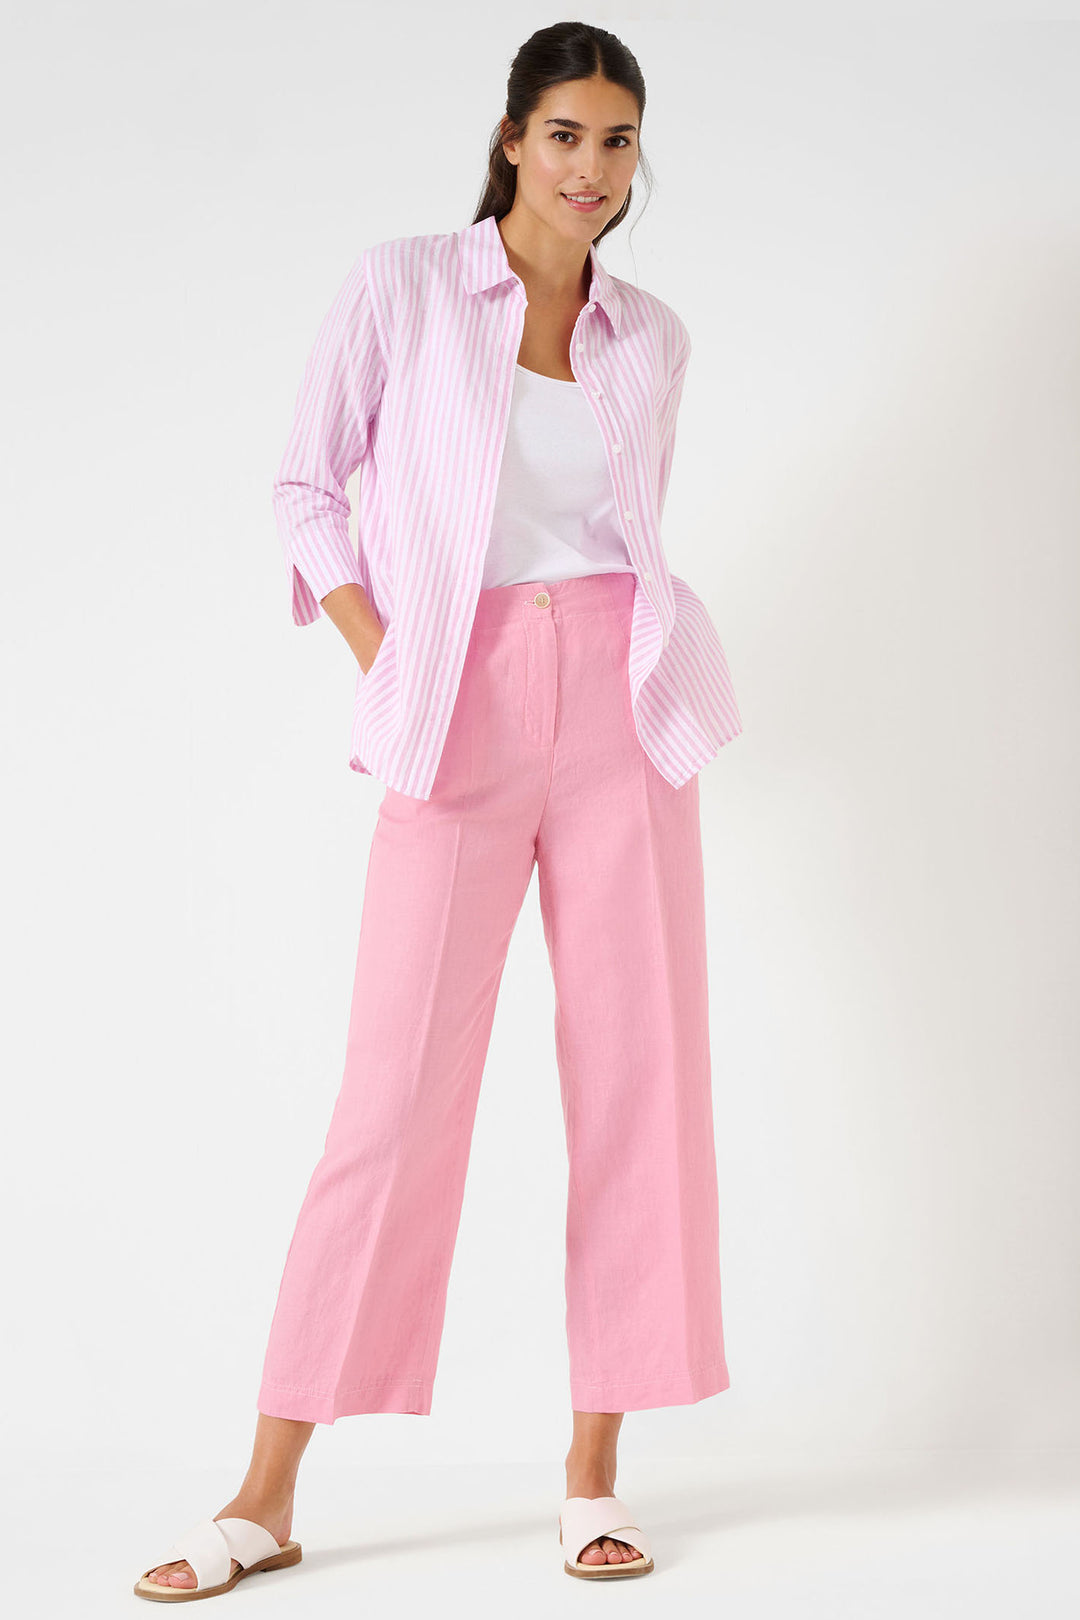 Brax Vicki 44-7568 94120200 48 Rosa Pink Stripe Linen Mix Shirt - Shirley Allum Boutique